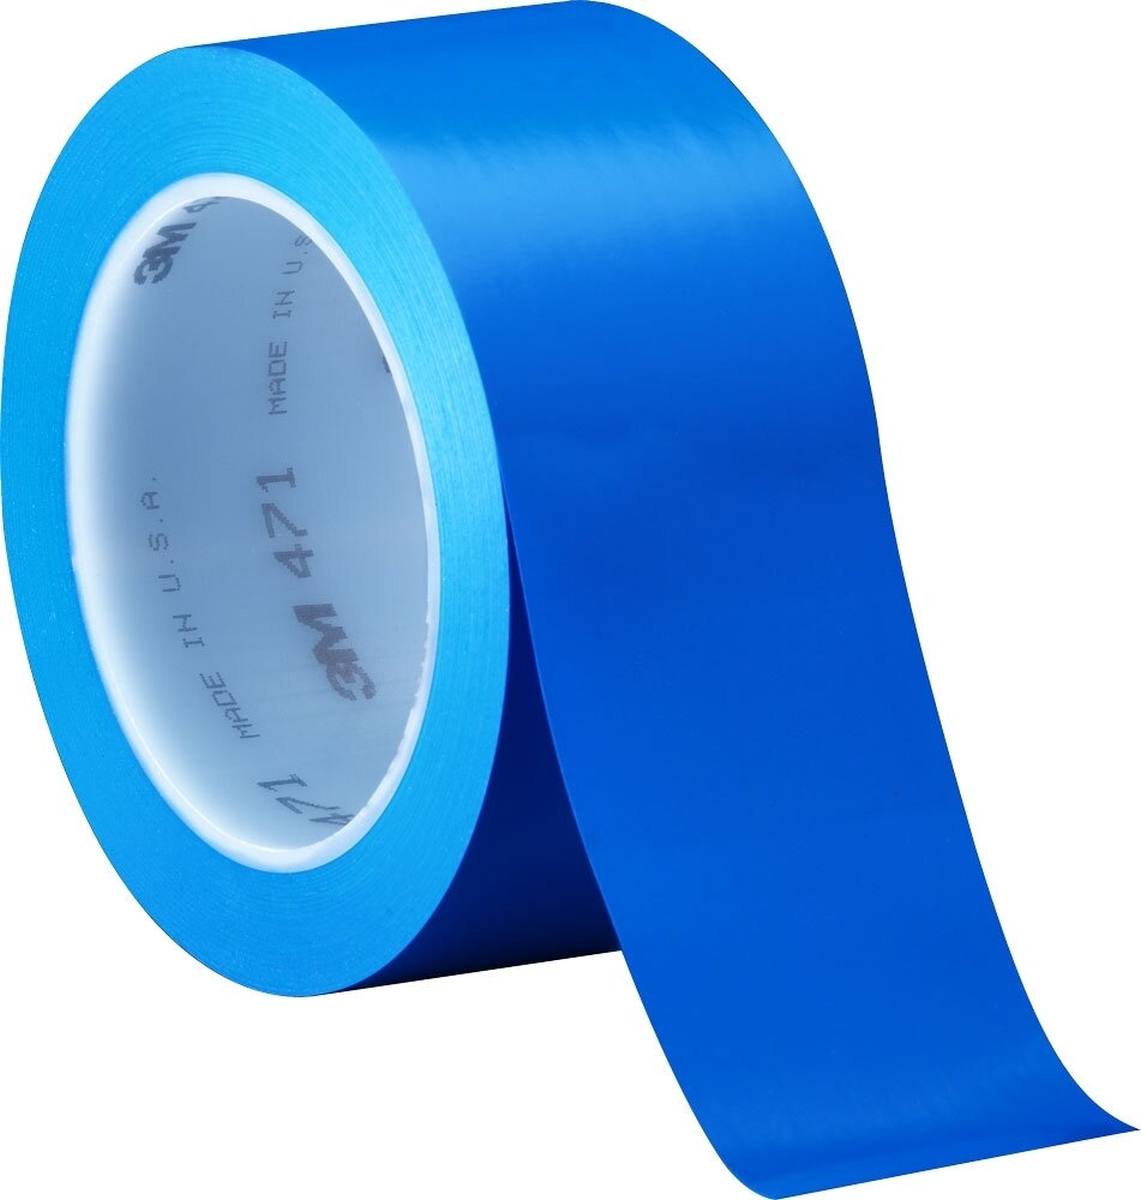 3M soft PVC adhesive tape 471 F, blue, 19 mm x 33 m, 0.13 mm